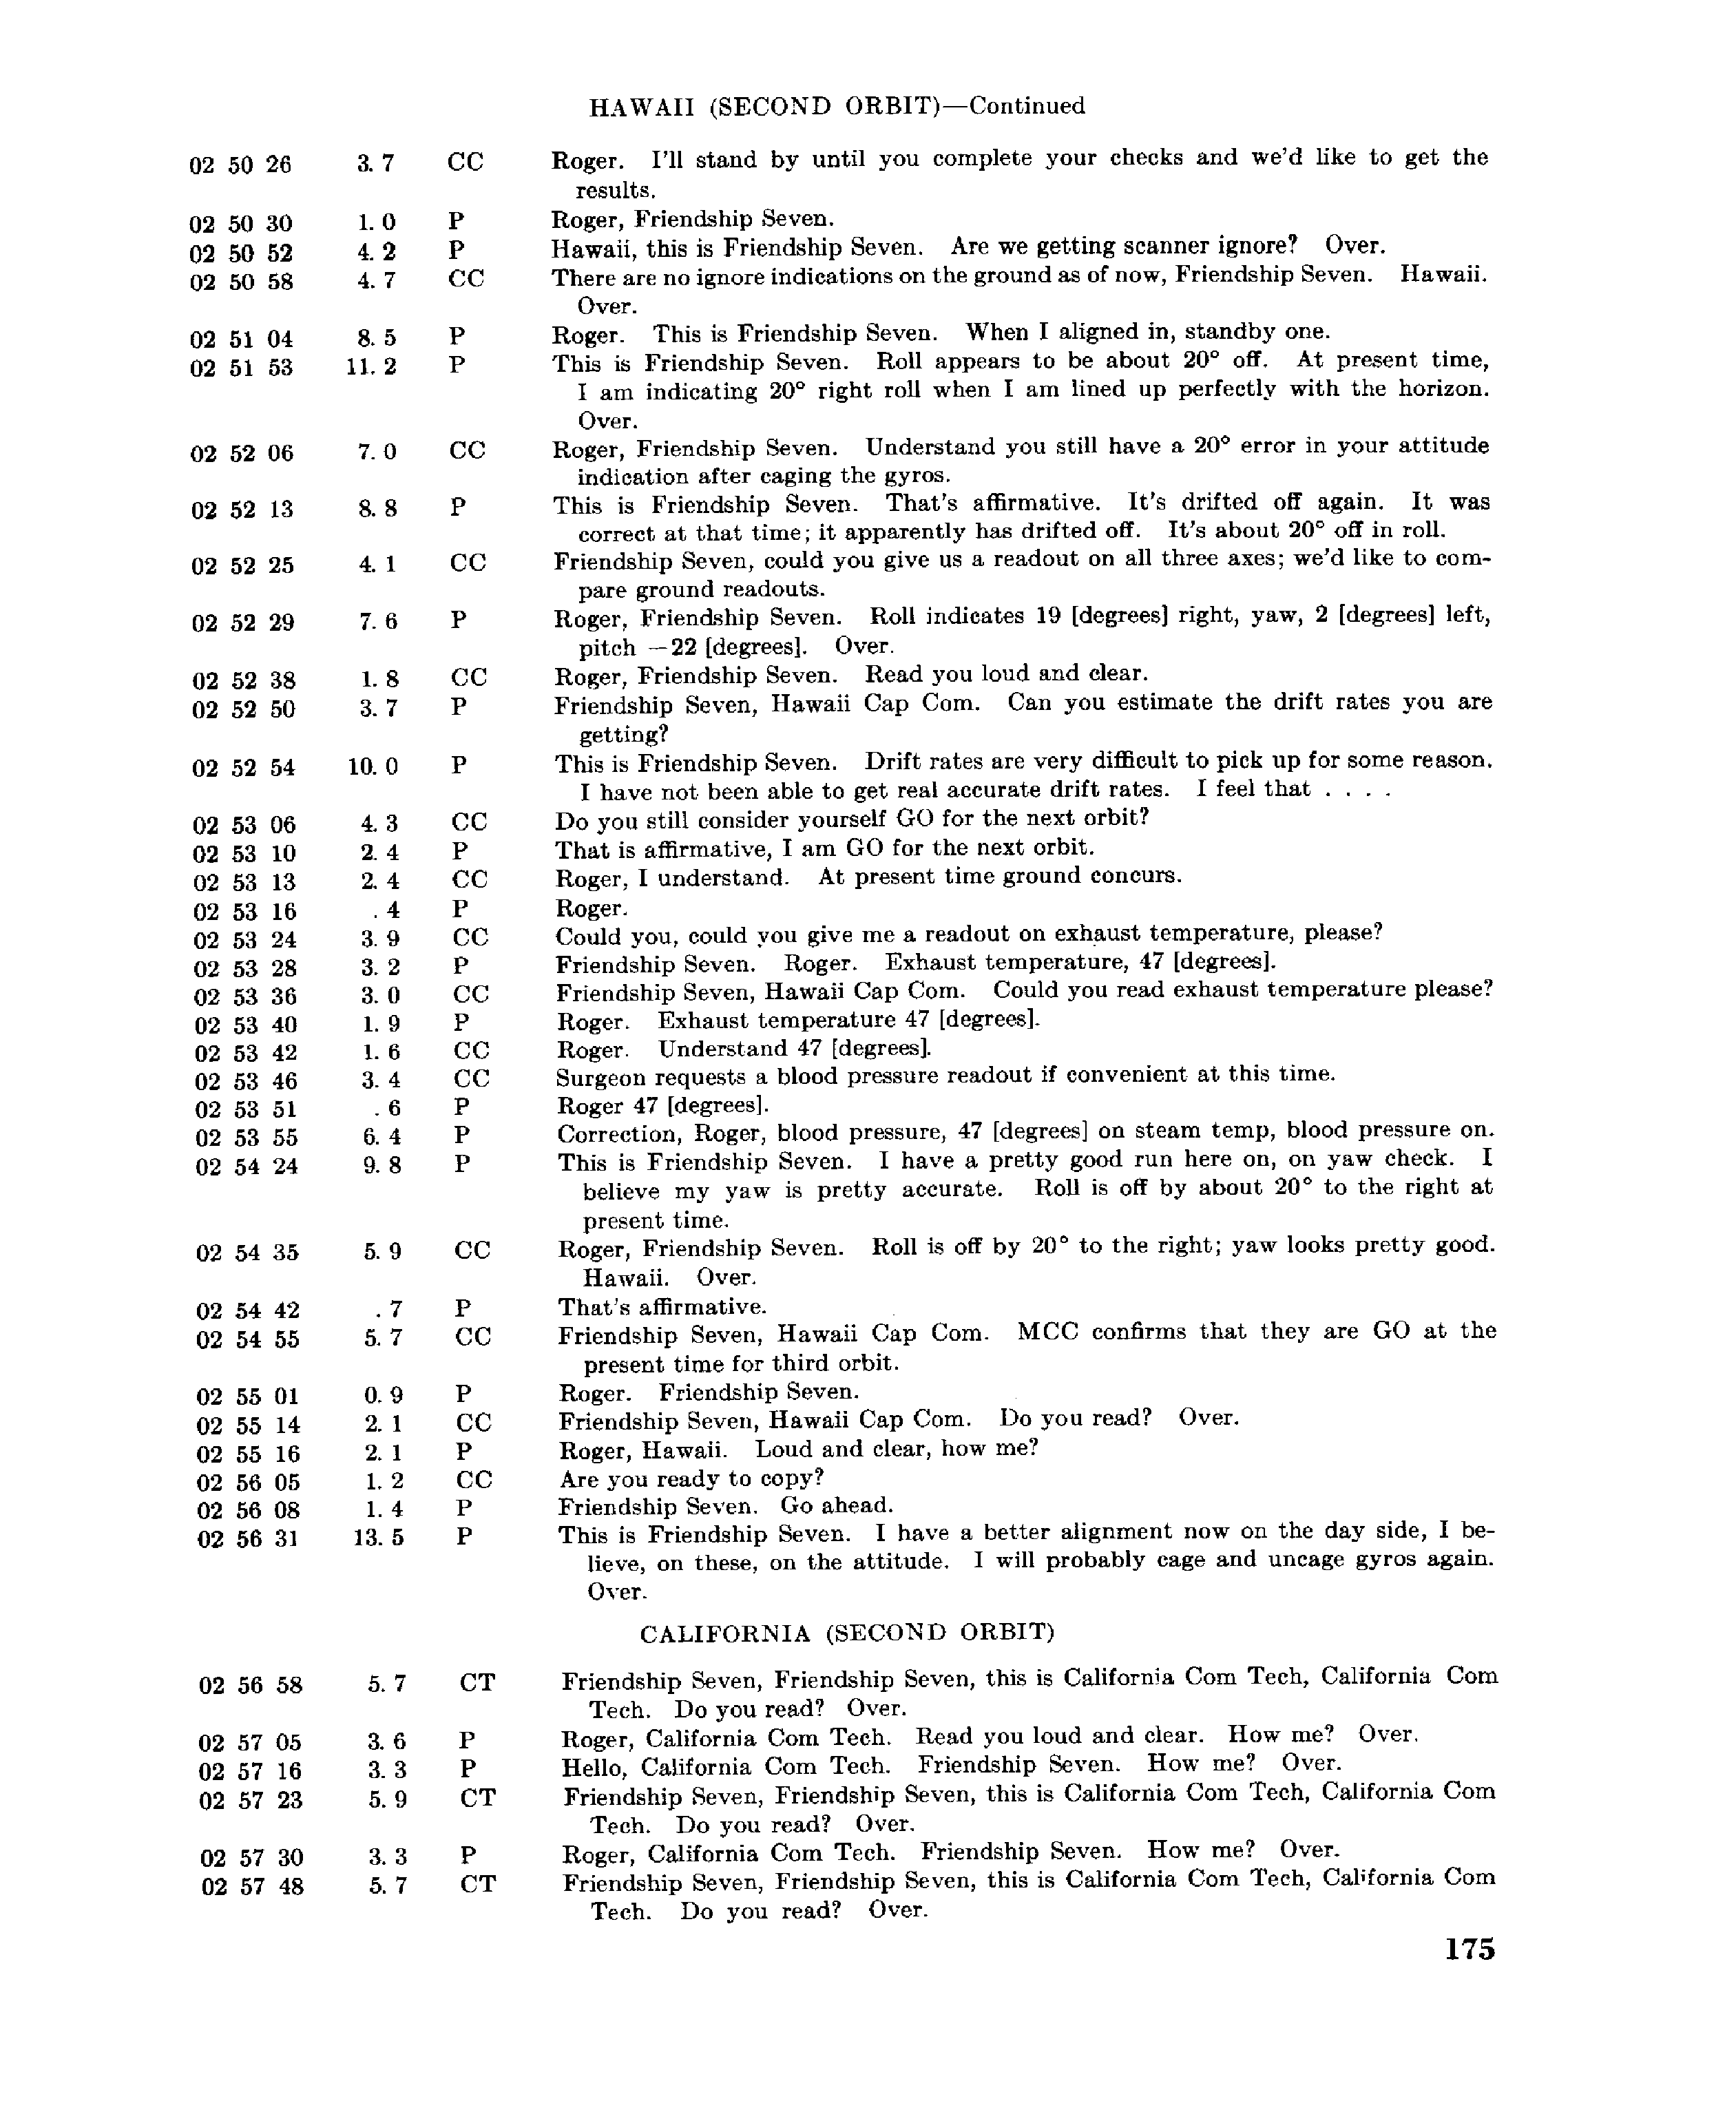 Page 174 of Mercury 6’s original transcript